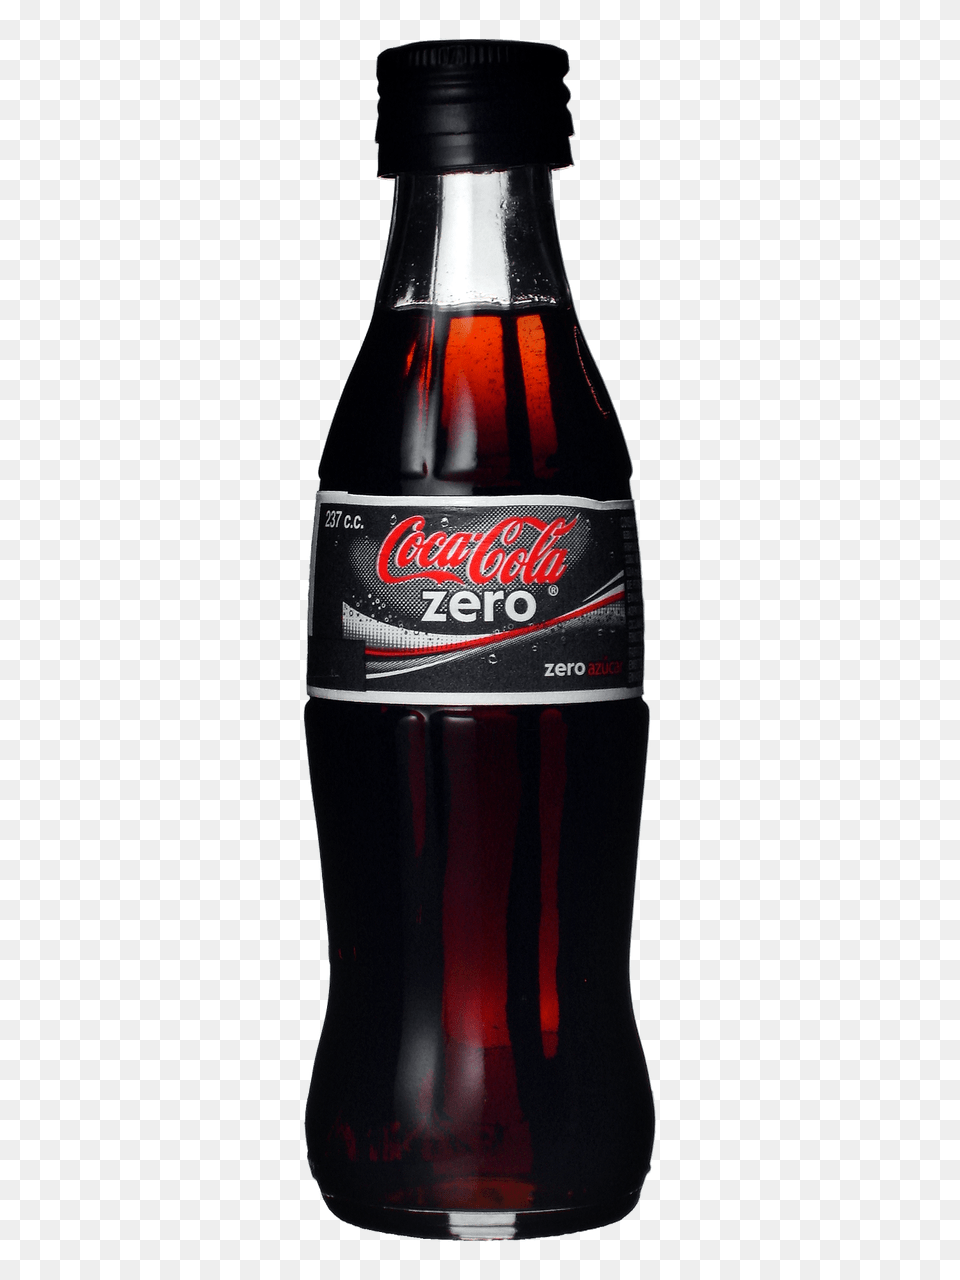 Coca Cola Bottle Beverage, Coke, Soda, Alcohol Free Png Download